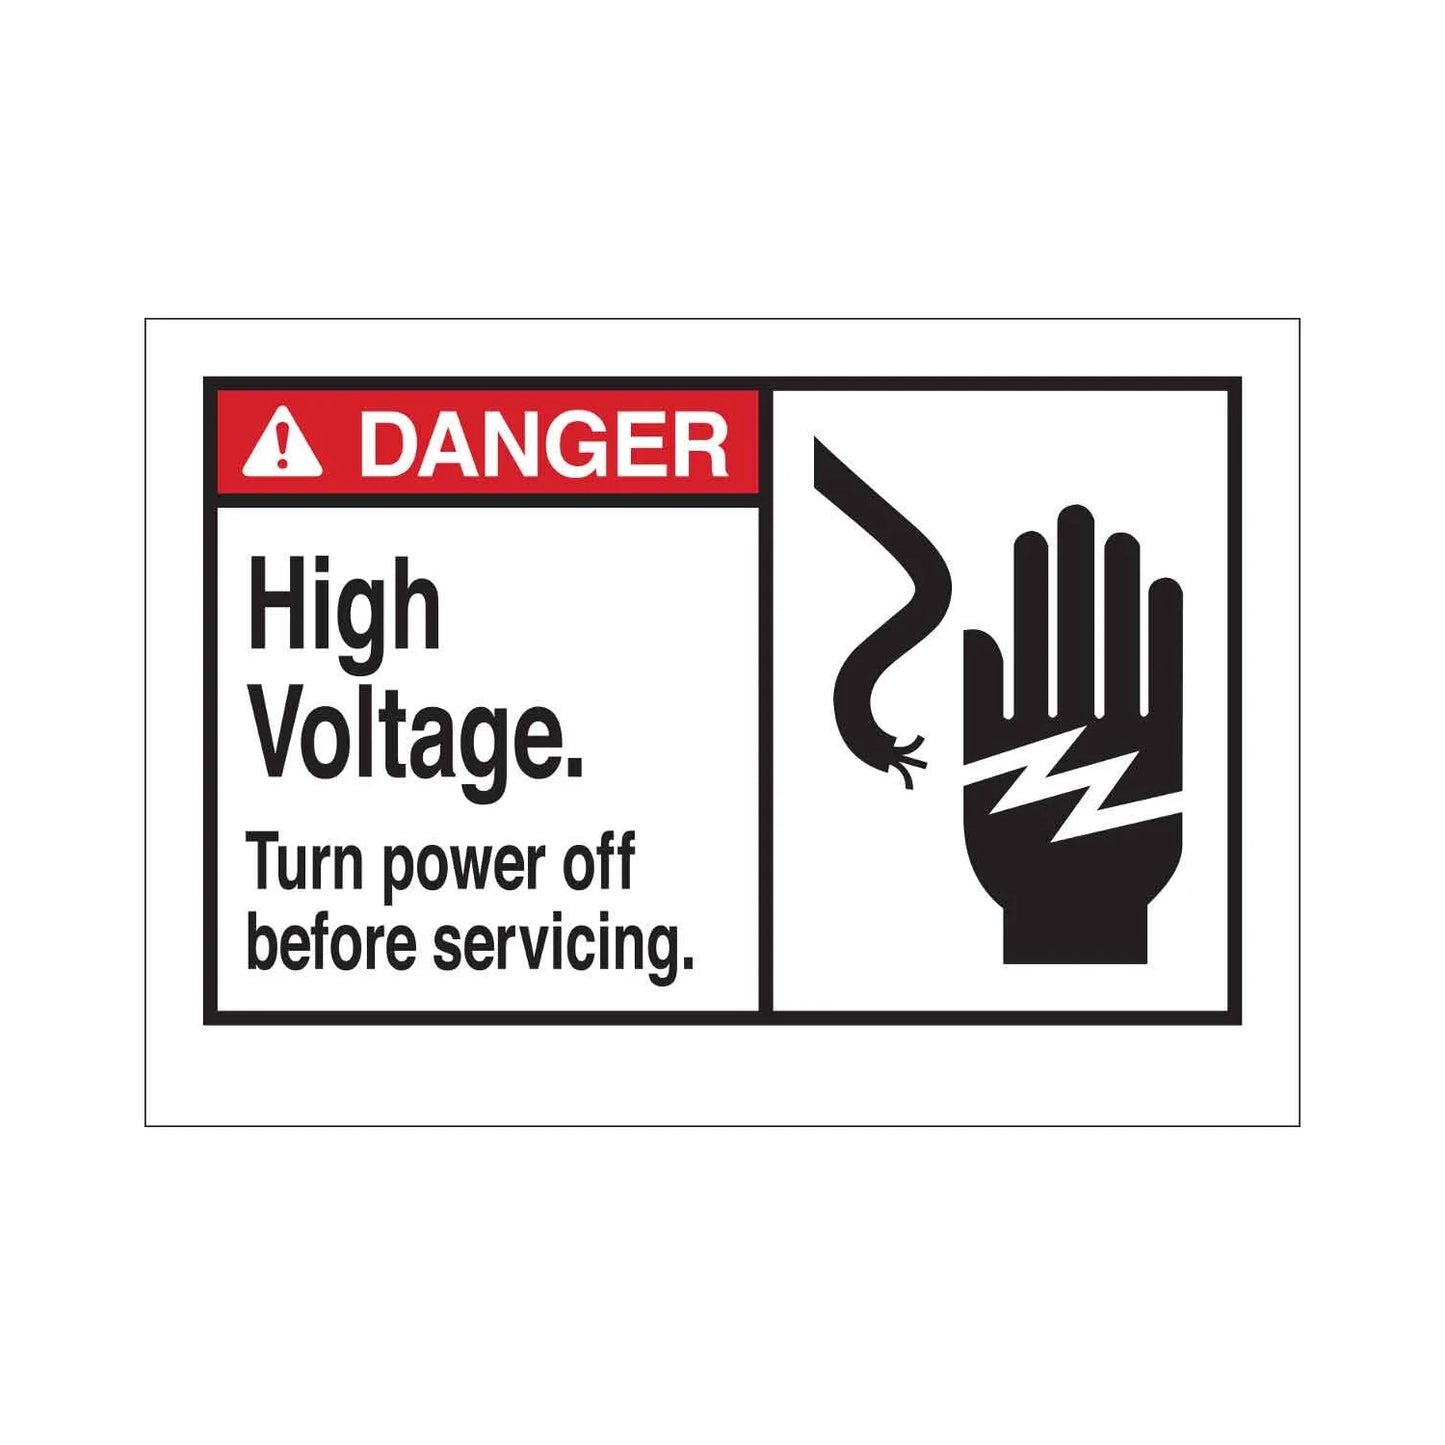 DANGER High Voltage. Turn Power Off Before Servicing.